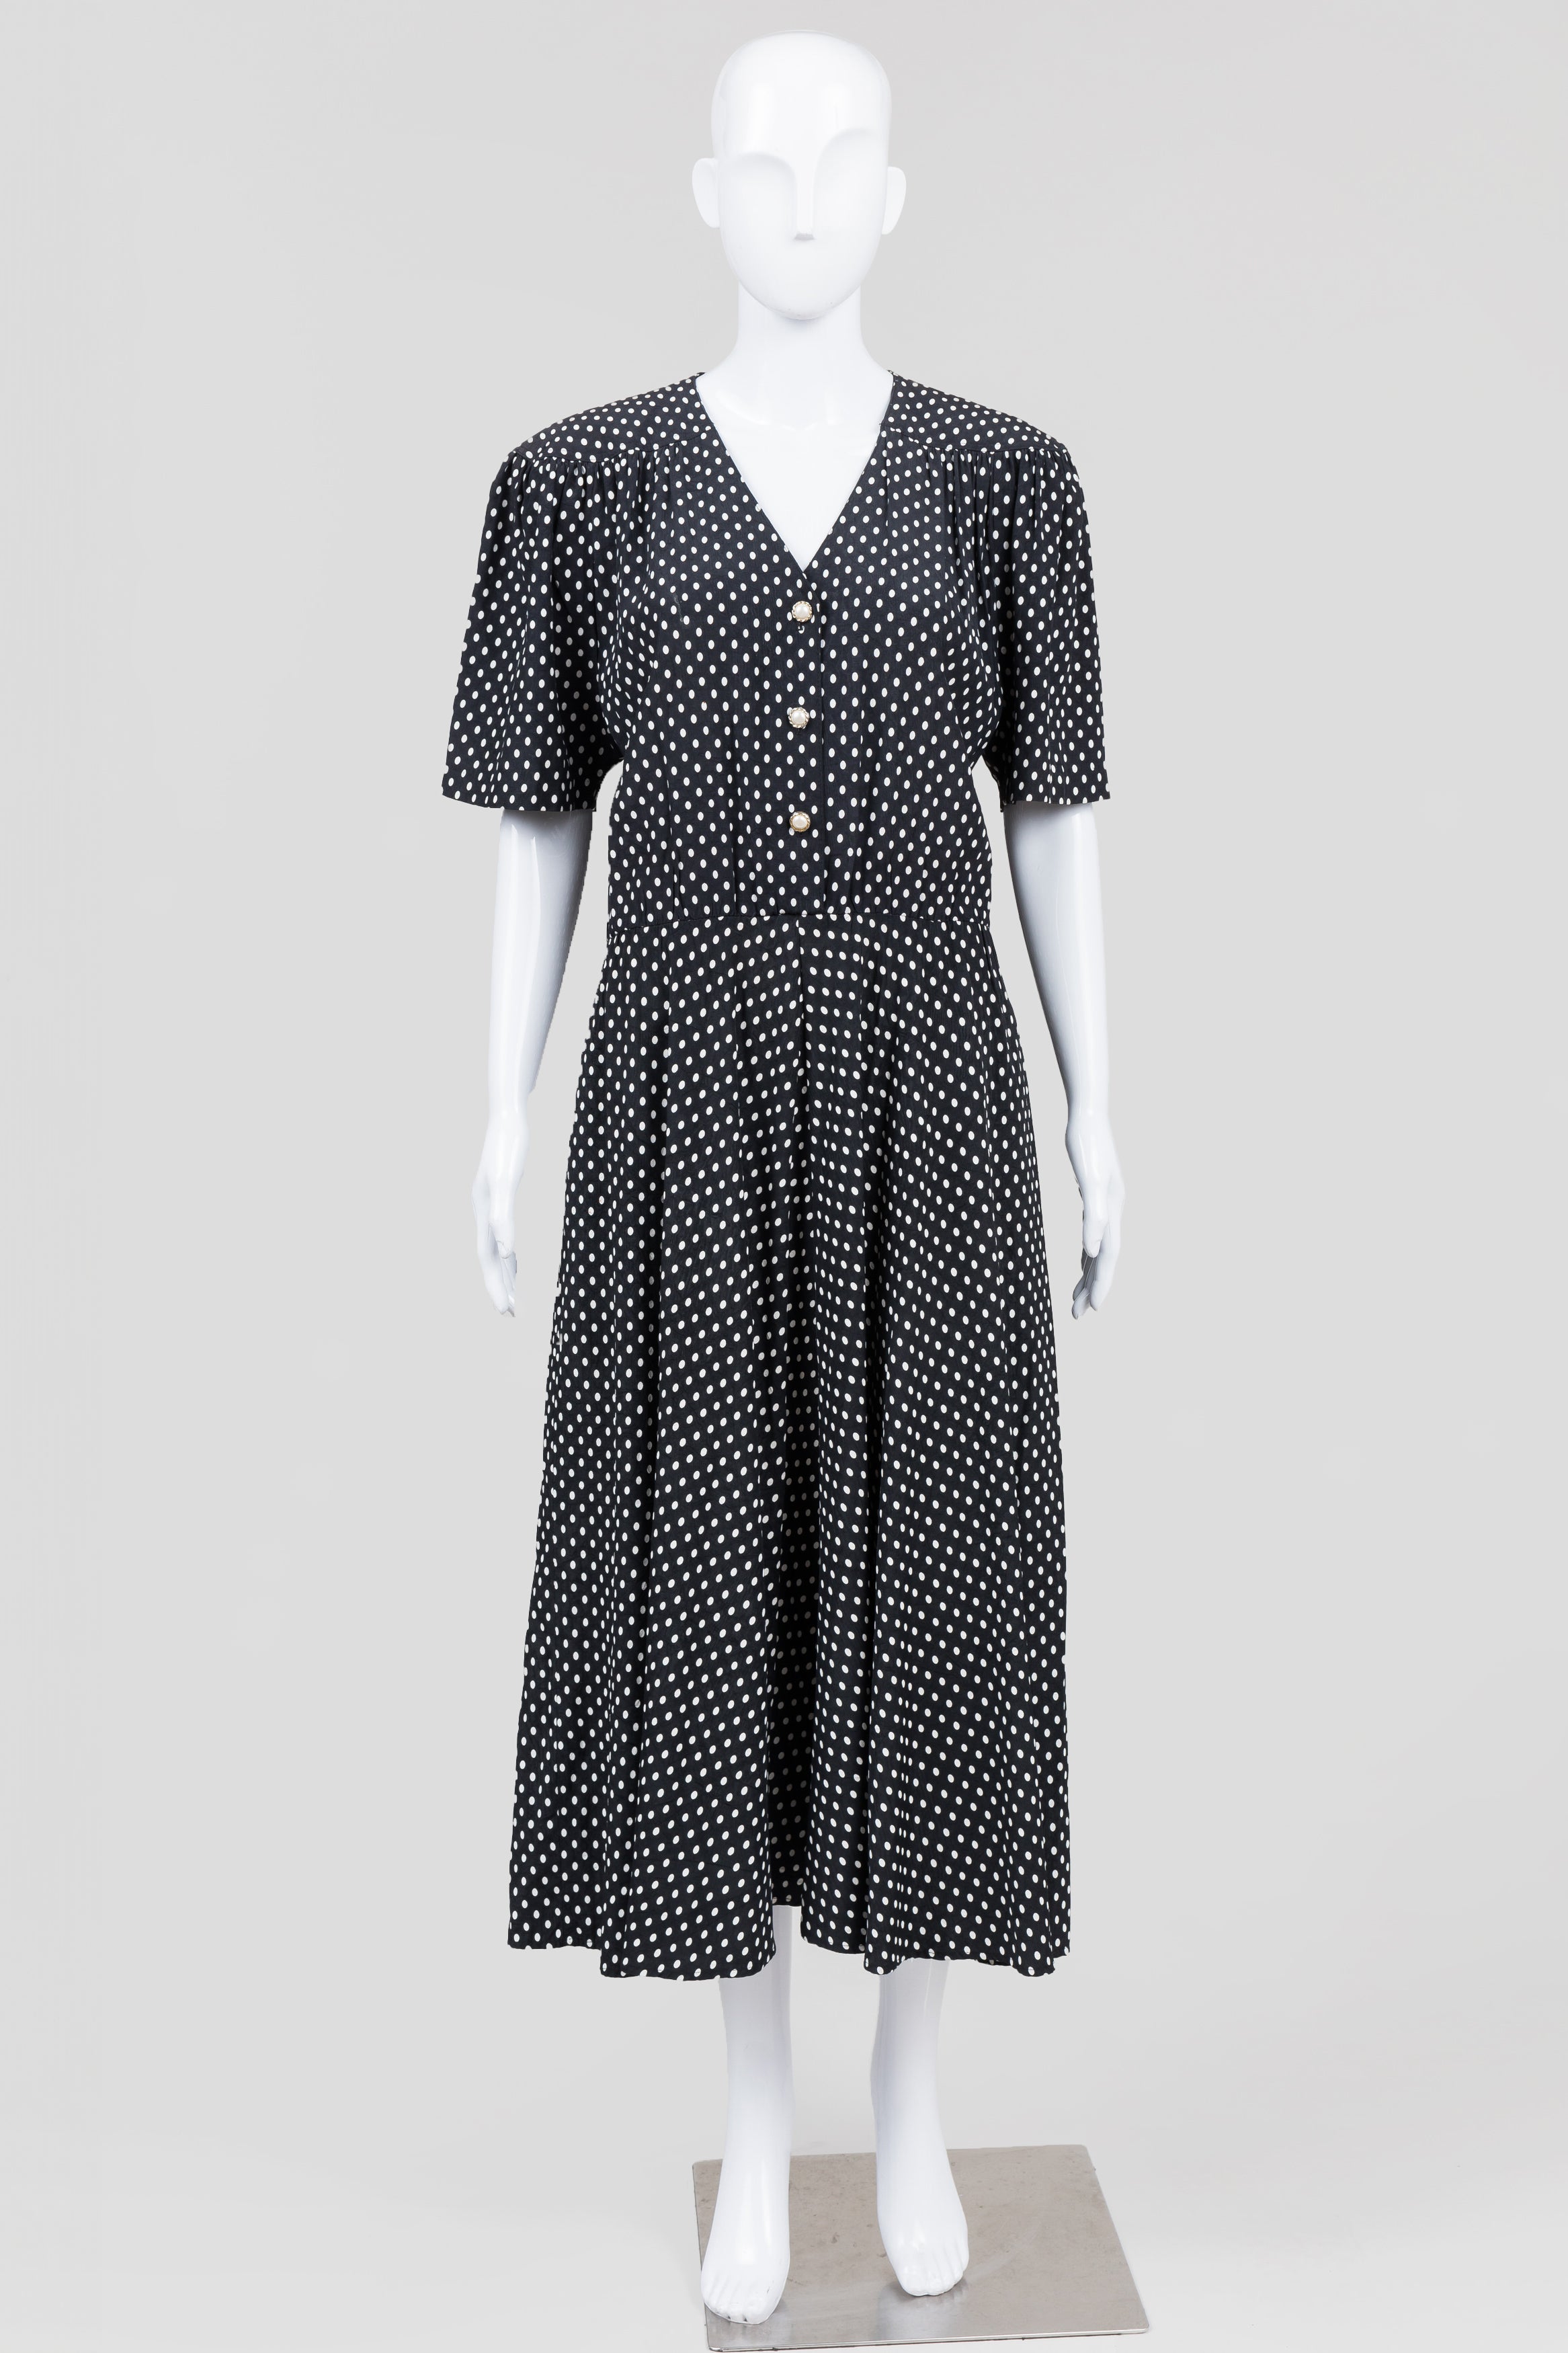 SL Fashions Navy Dot Vintage Fit & Flare Dress (12)